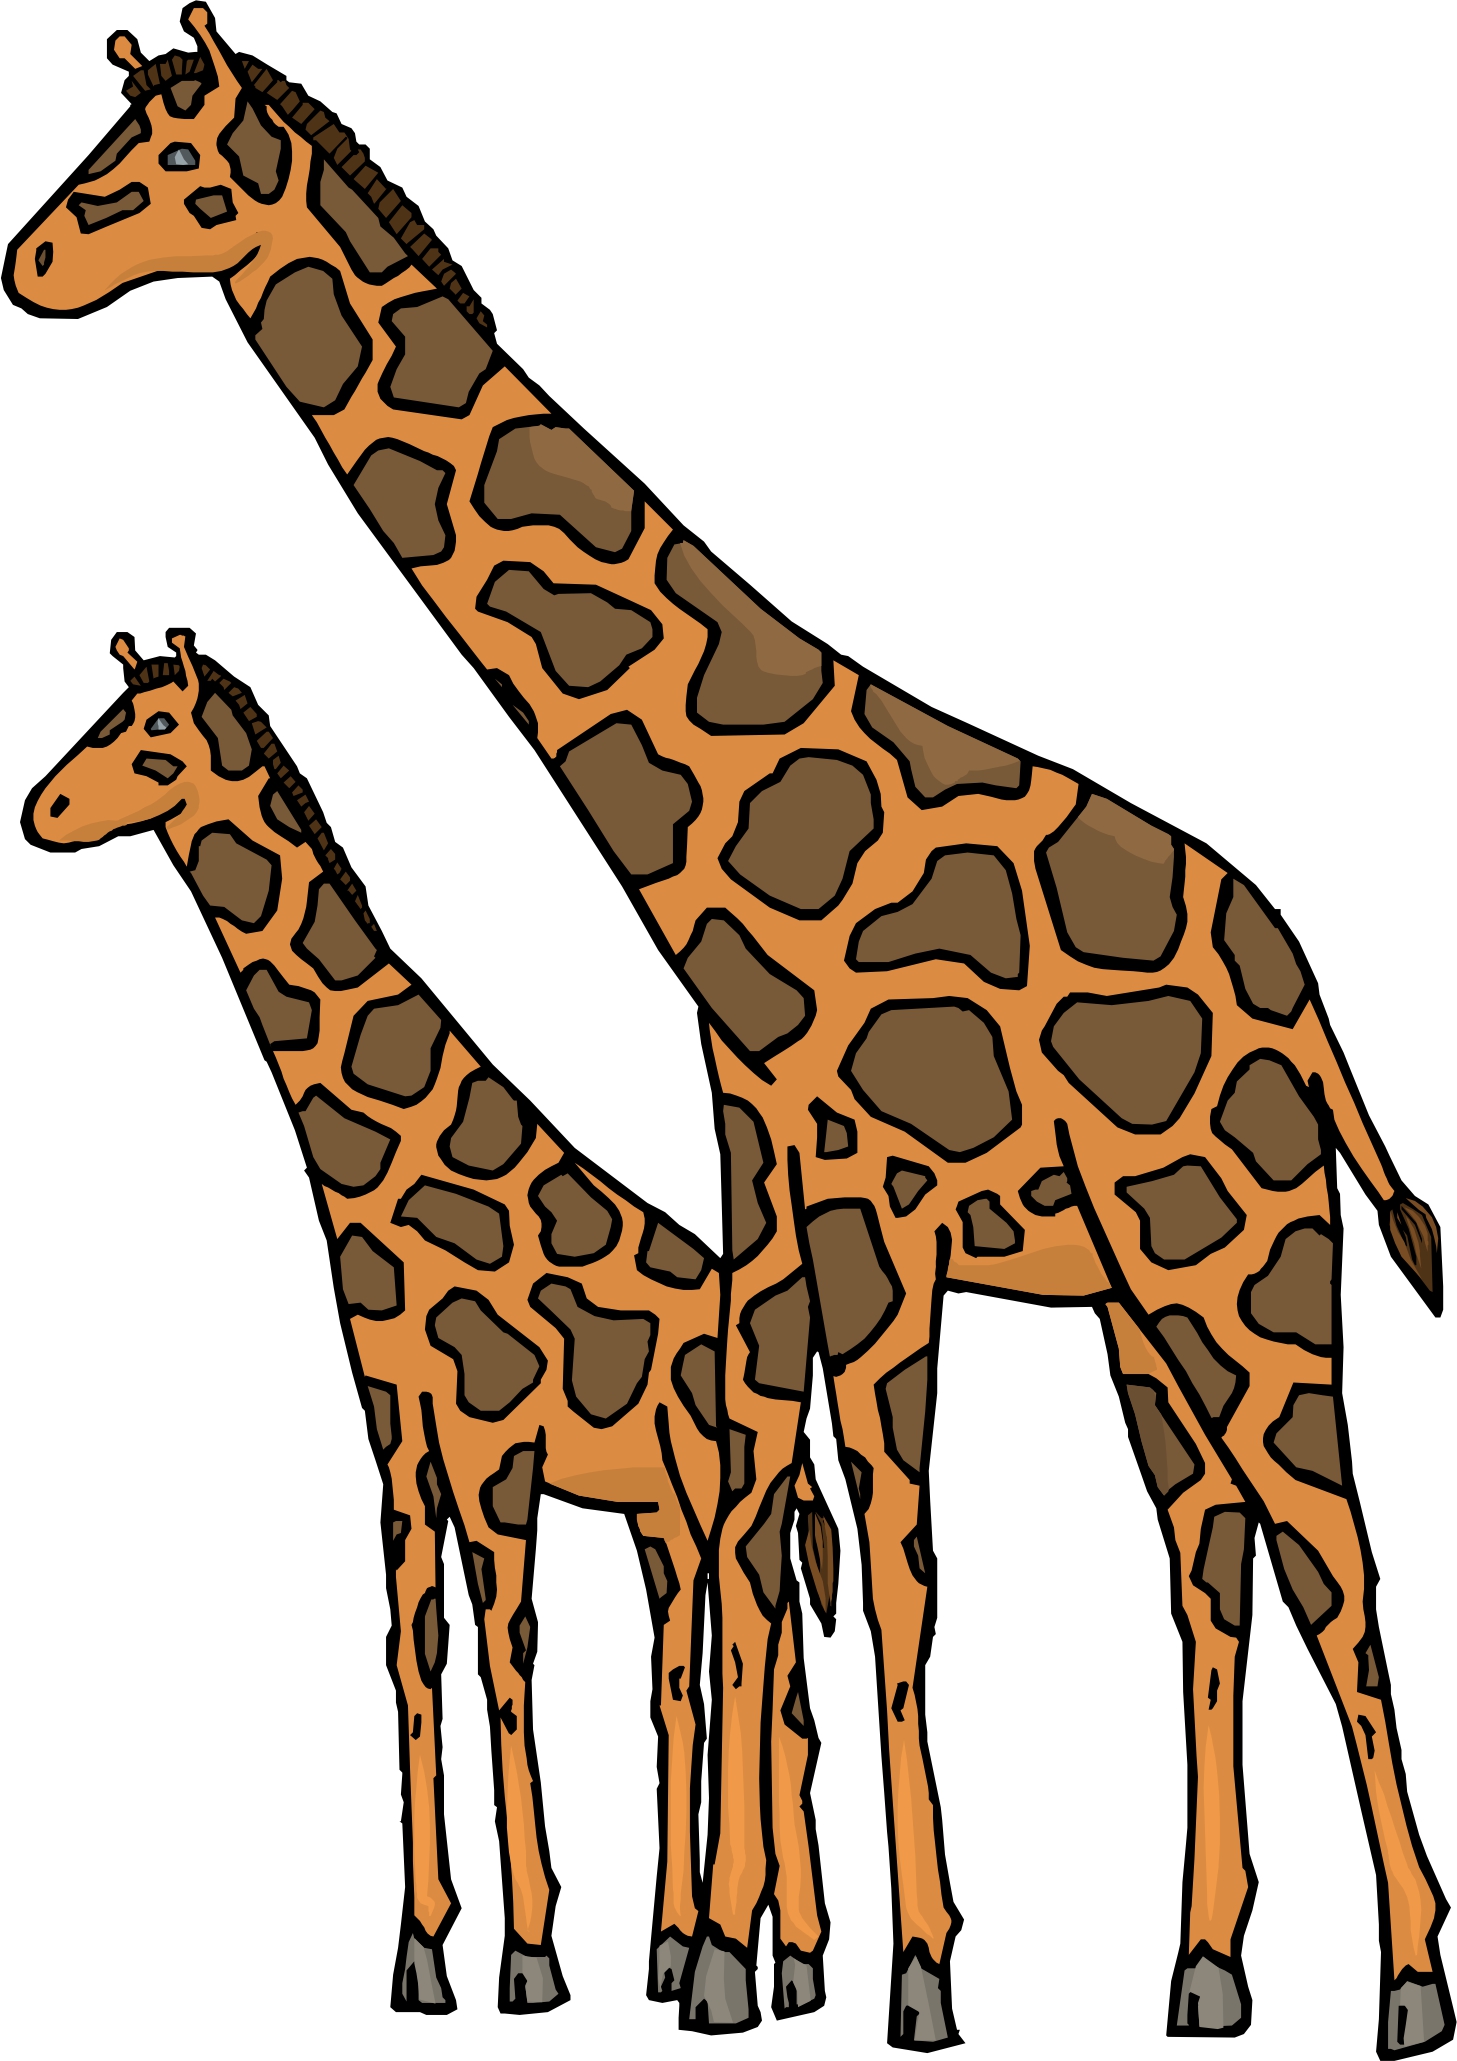 Cartoon baby images library. Clipart giraffe 2 giraffe